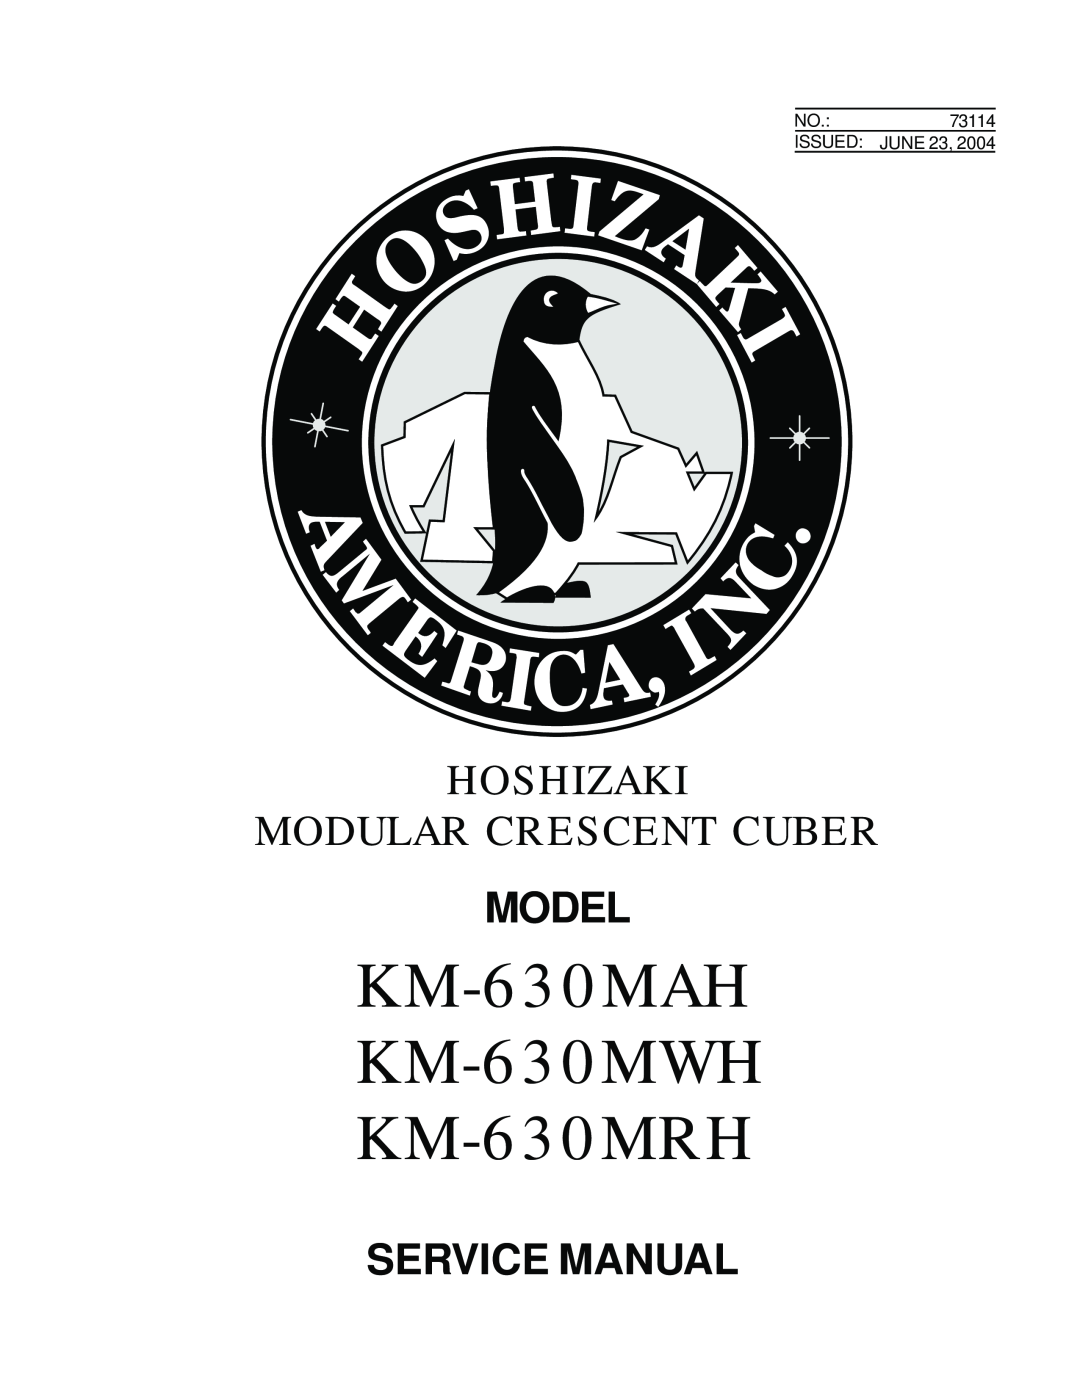 Hoshizaki service manual KM-630MAH KM-630MWH KM-630MRH, Hoshizaki Modular Crescent Cuber, Model 